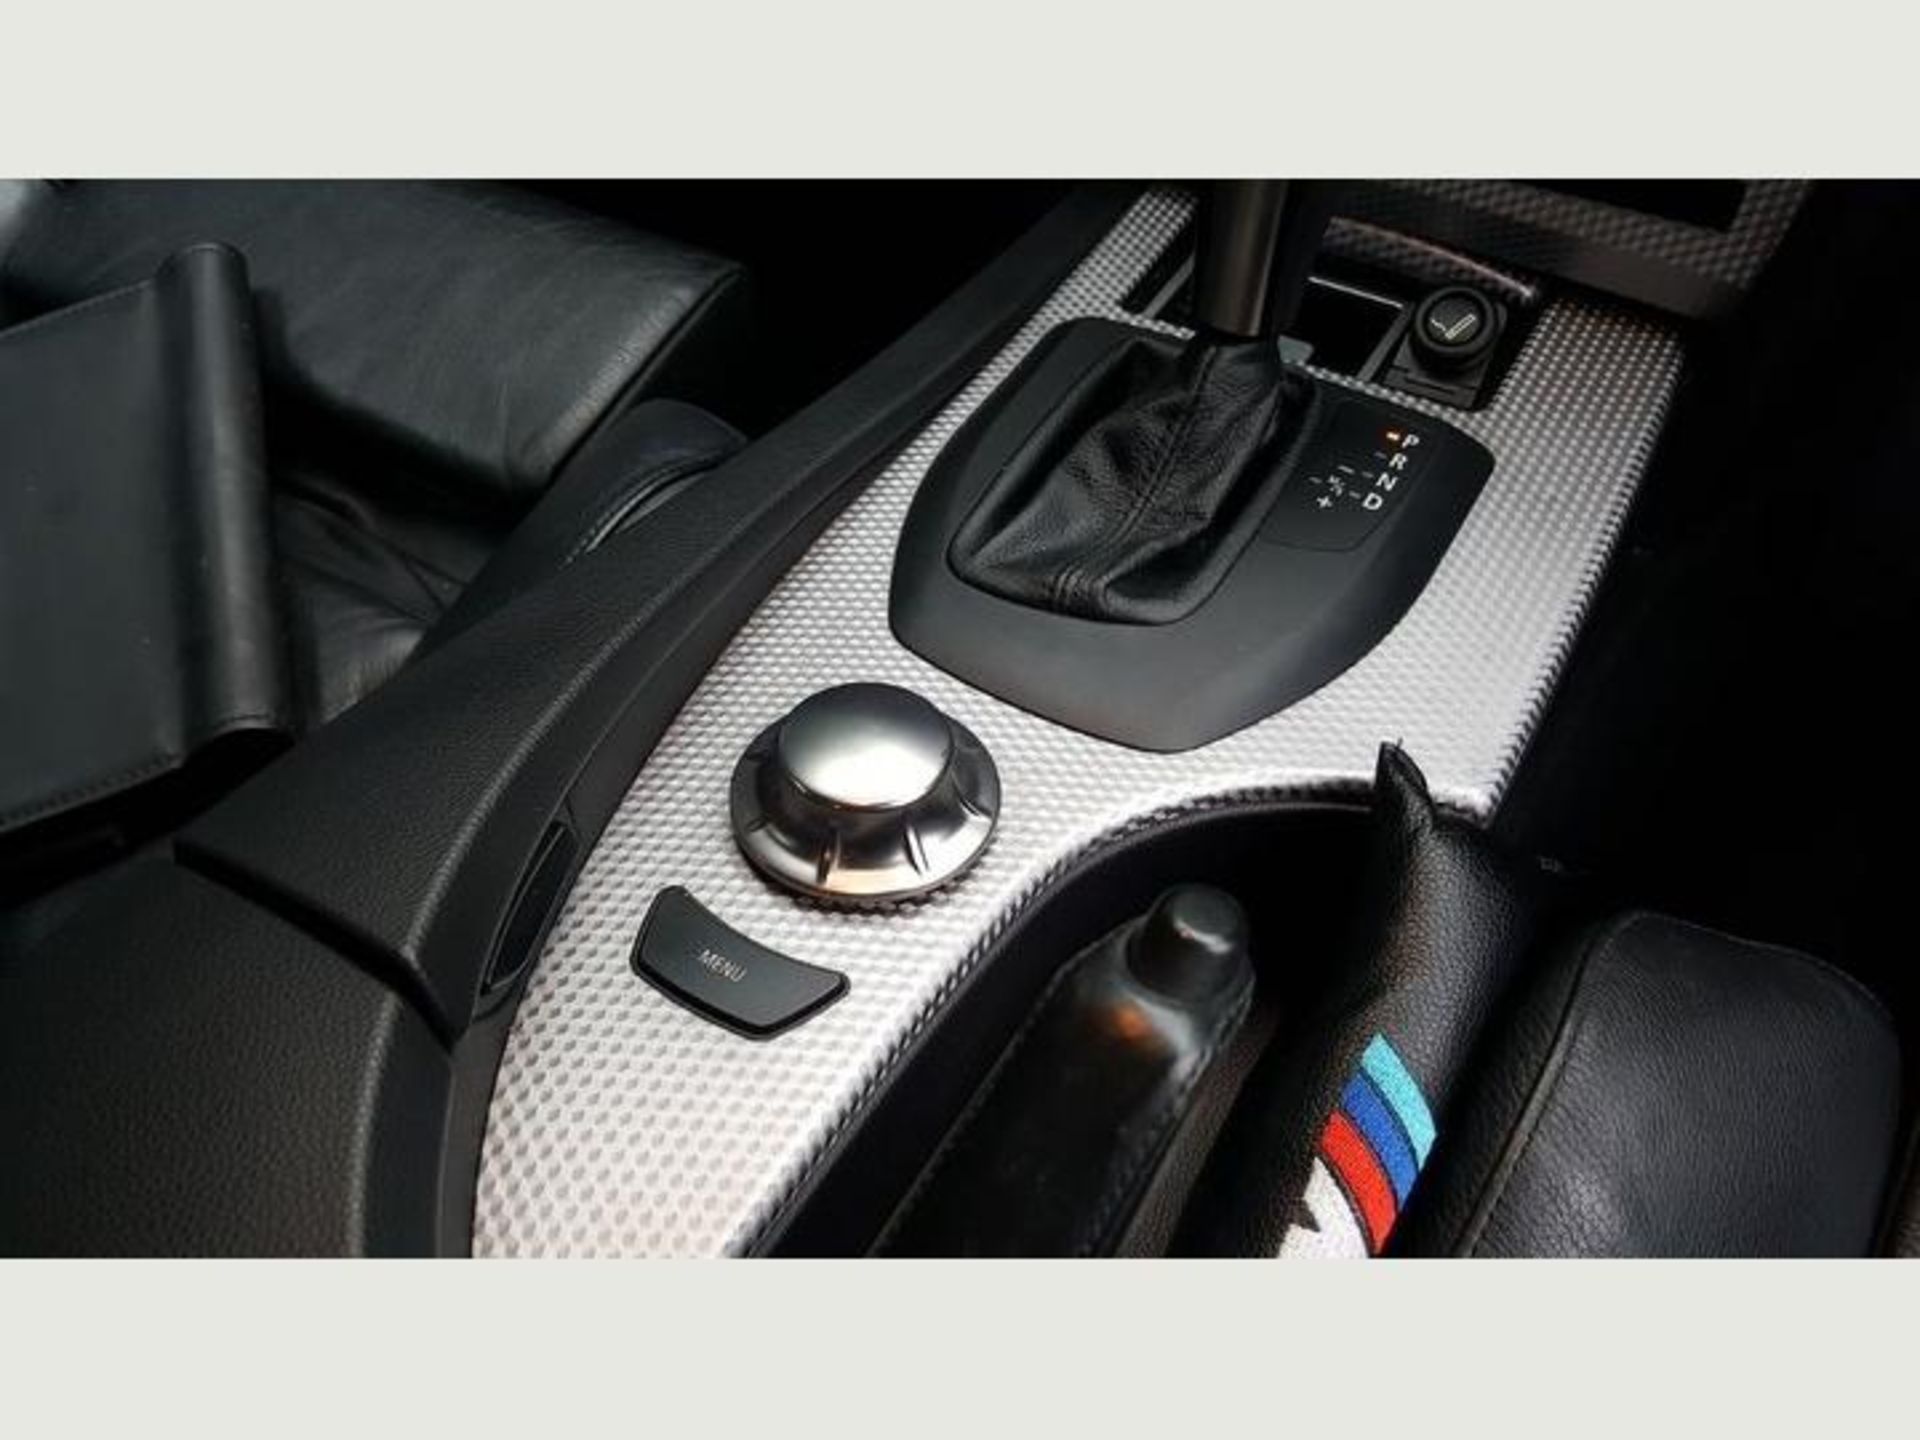 BMW, 5 SERIES 525D SPORT, ULZ 9248, 2-5 LTR, DIESEL, AUTOMATIC, 4 DOOR SALOON, 18.03.2005, CURRENT - Image 22 of 24